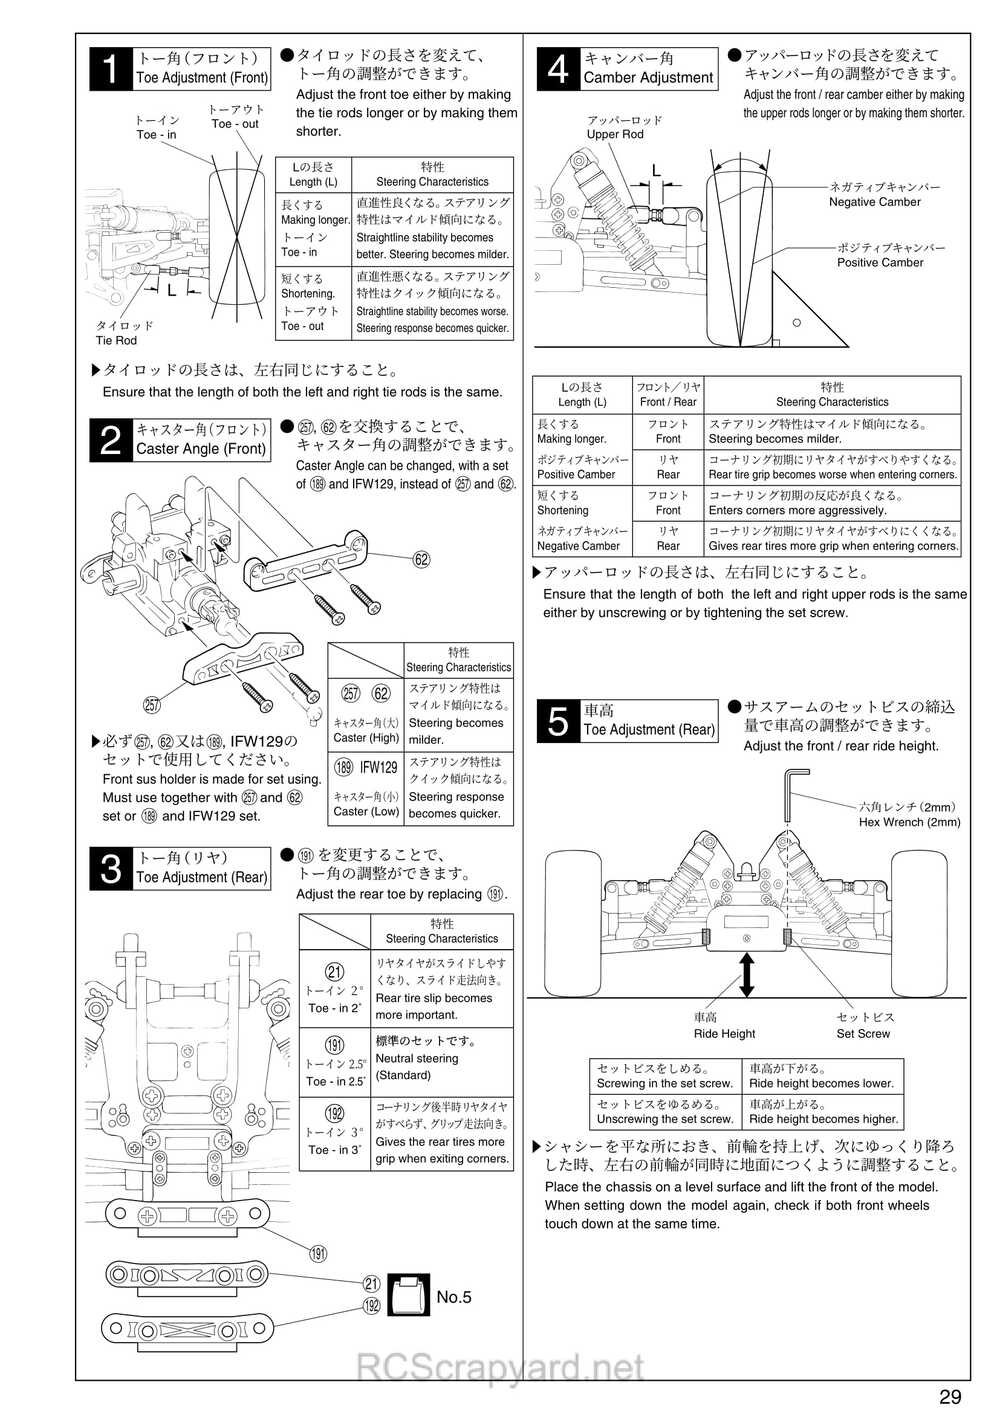 Kyosho - 31273 - Inferno-MP-7-5-Yuichi3 - Manual - Page 29